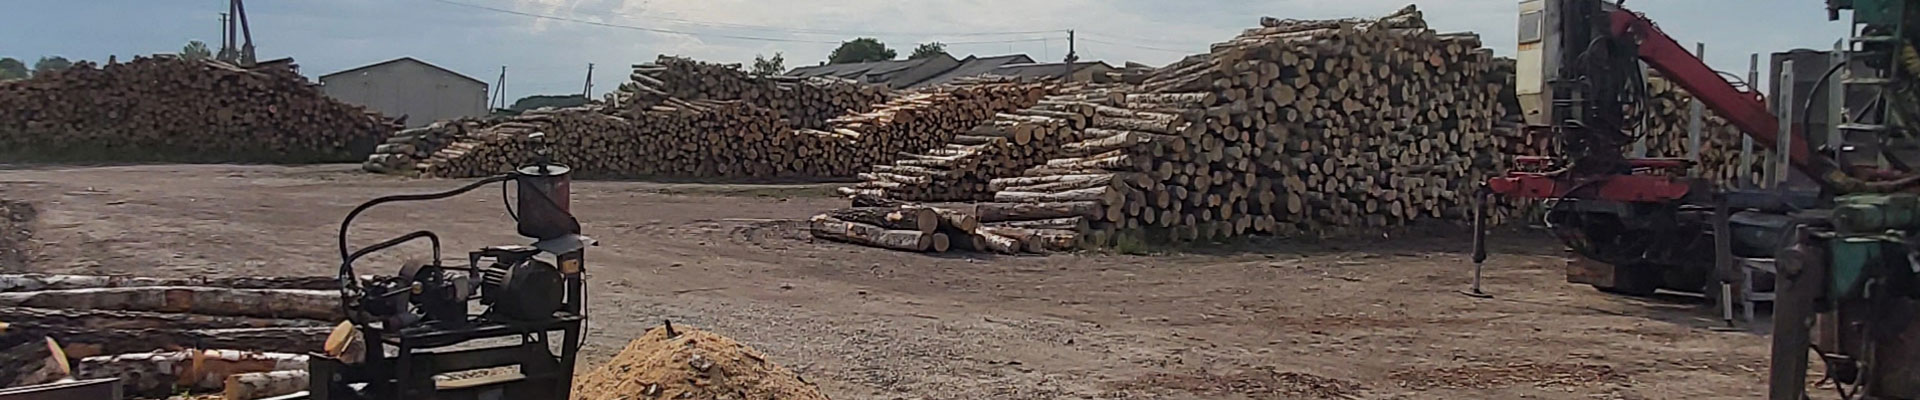 Auzis apvali mediena šalia gamyklos